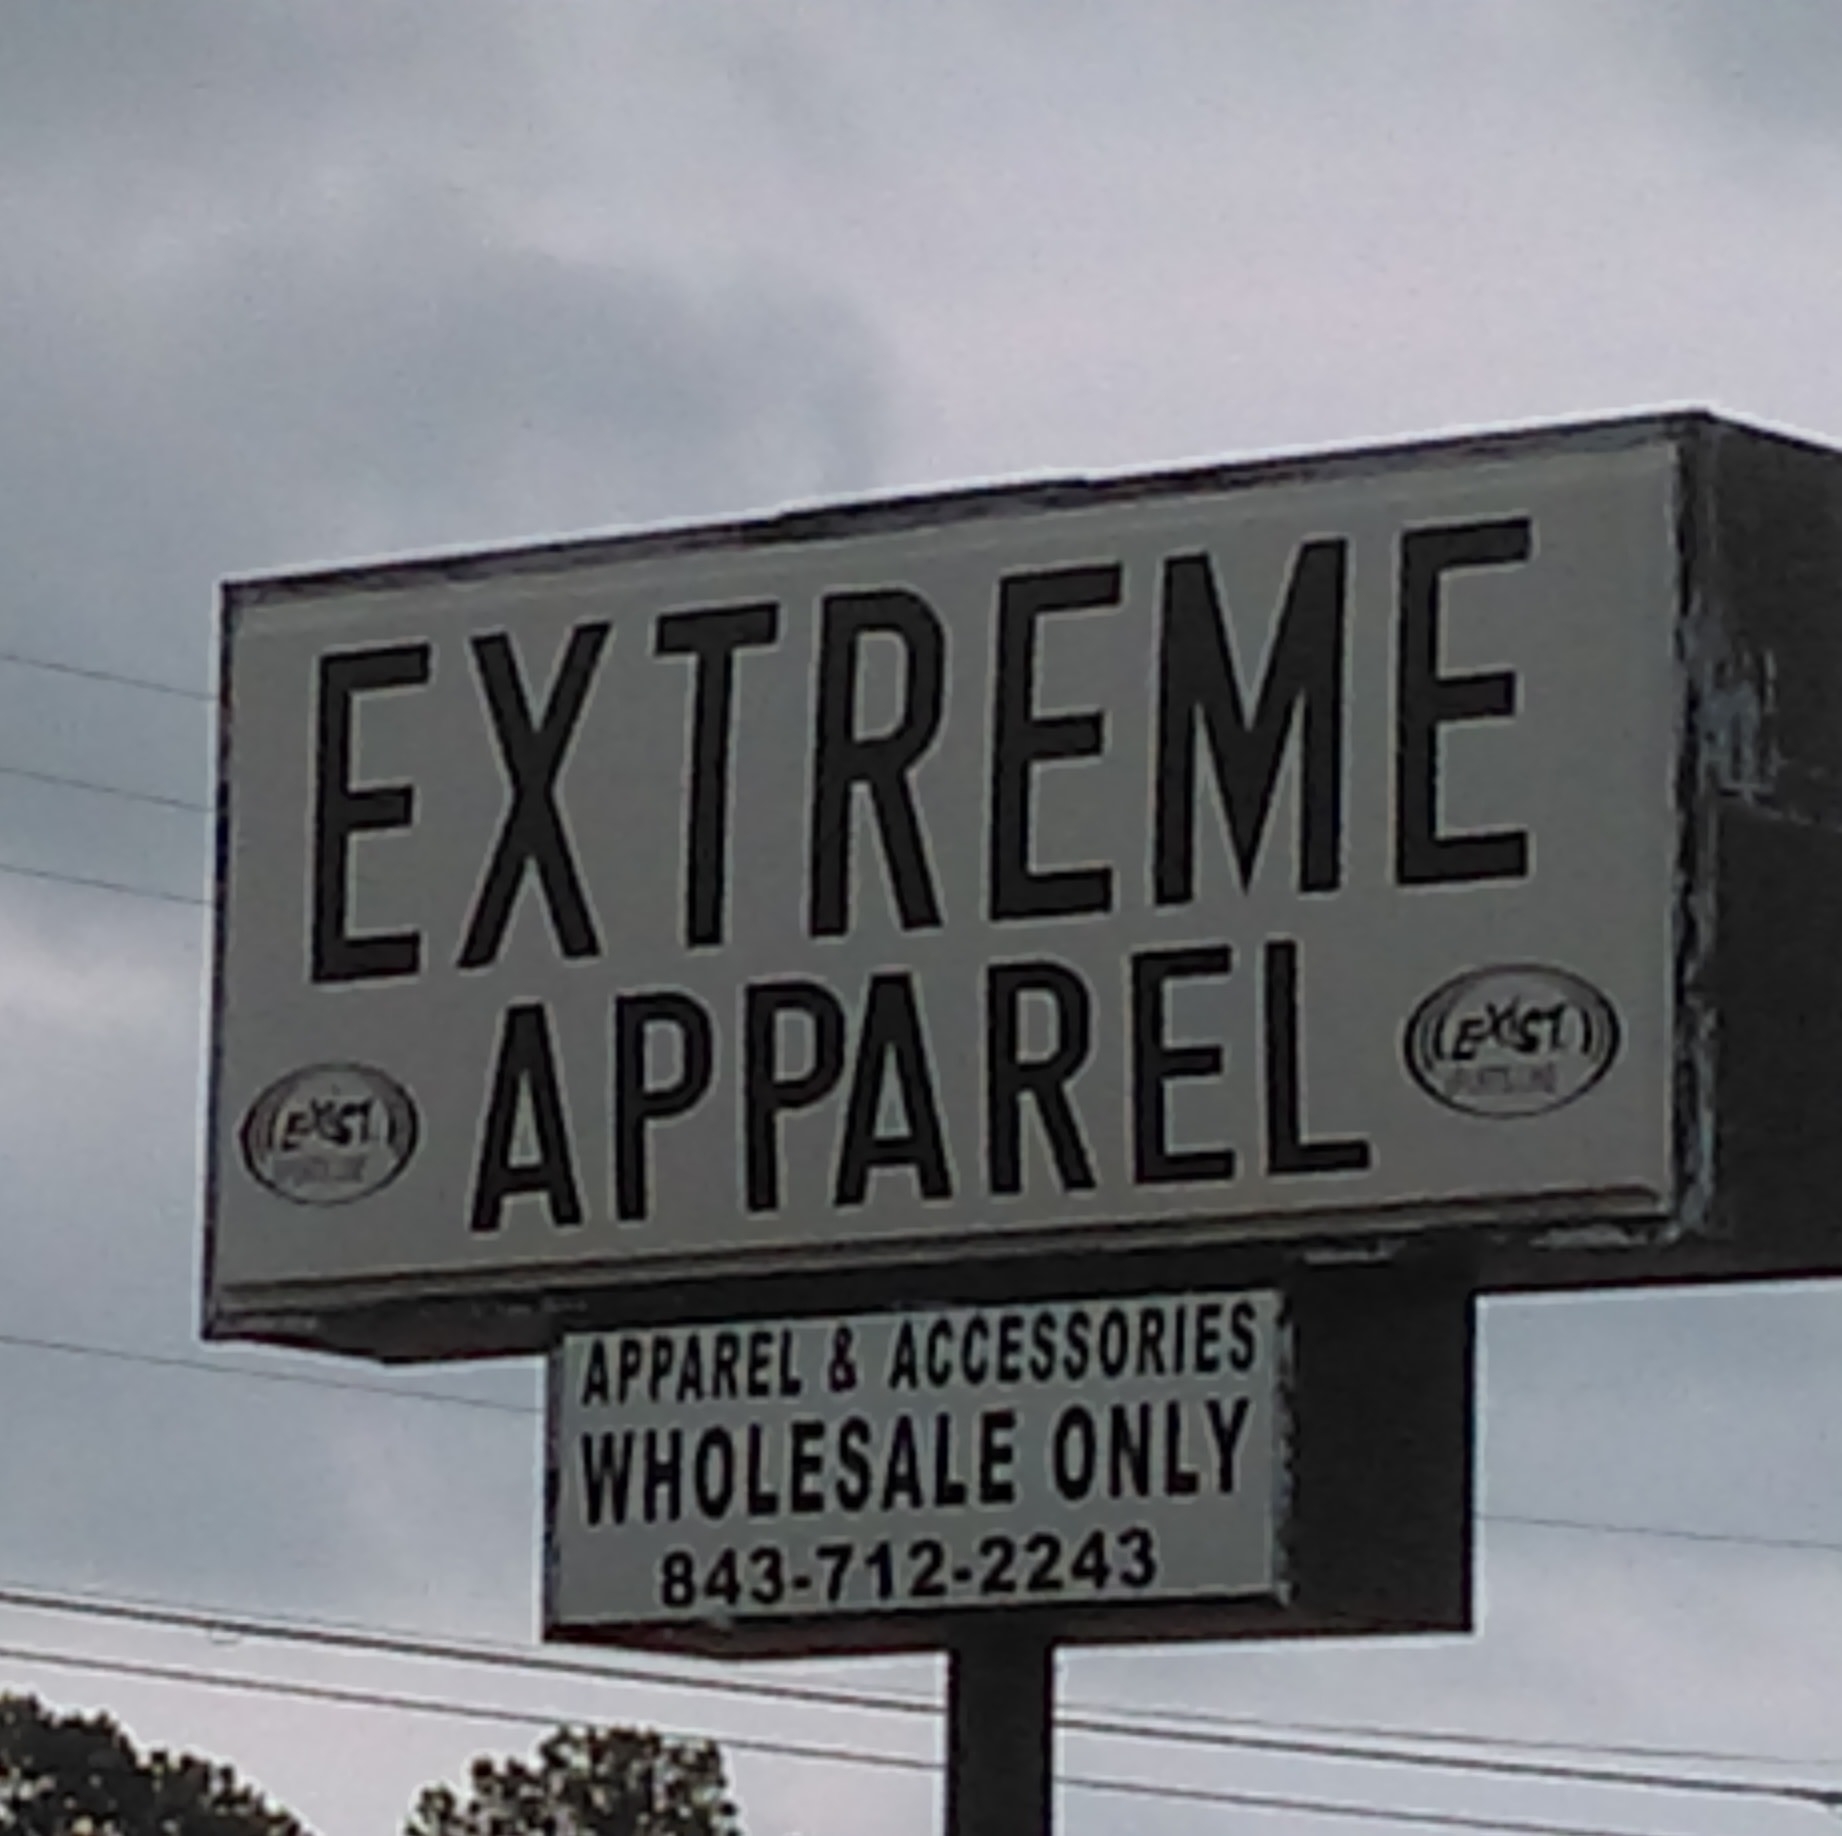 Extreme Apparel